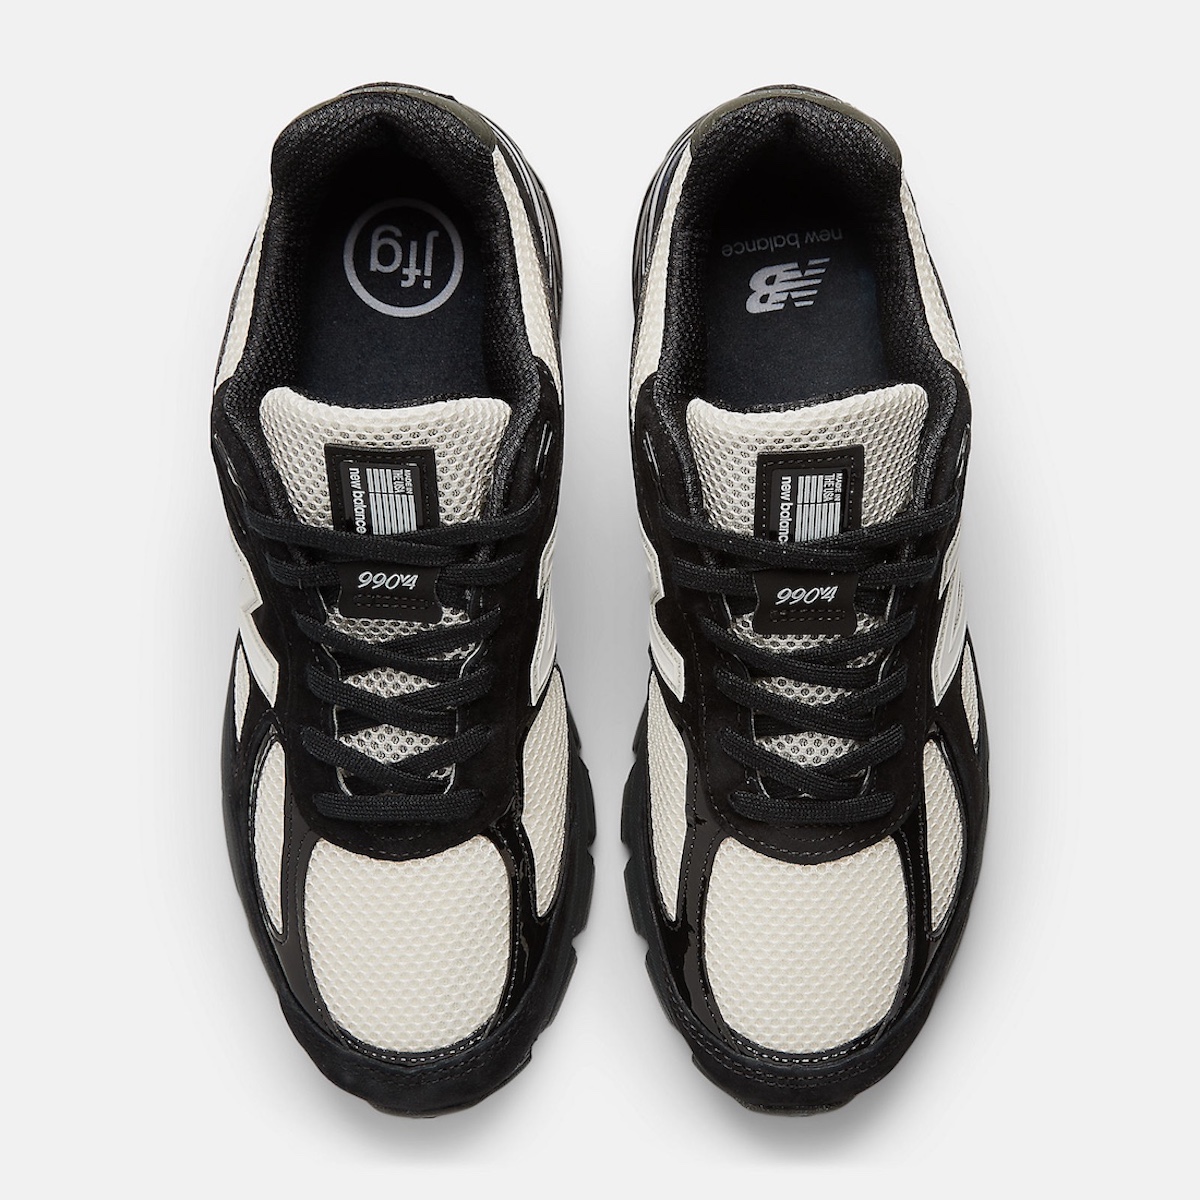 Joe Freshgoods x New Balance 990v4 1998 | SneakerFiles